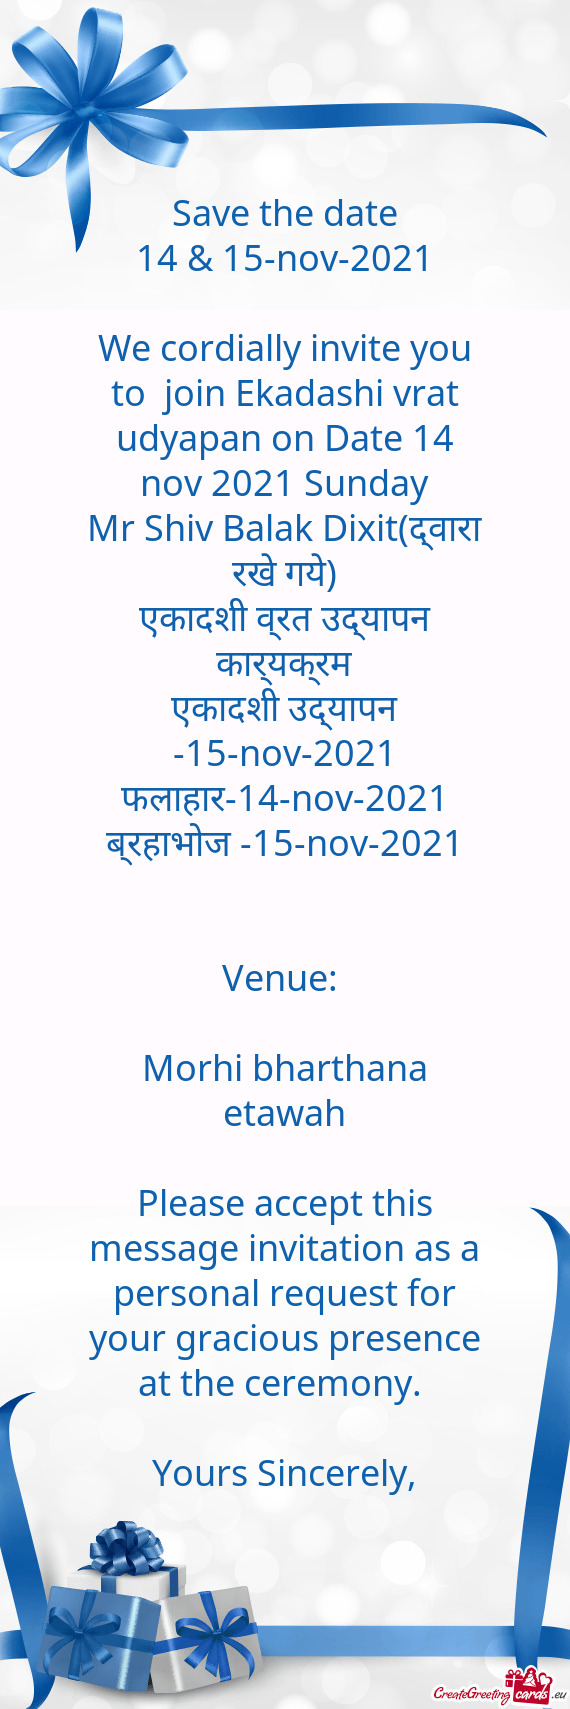 We cordially invite you to join Ekadashi vrat udyapan on Date 14 nov 2021 Sunday